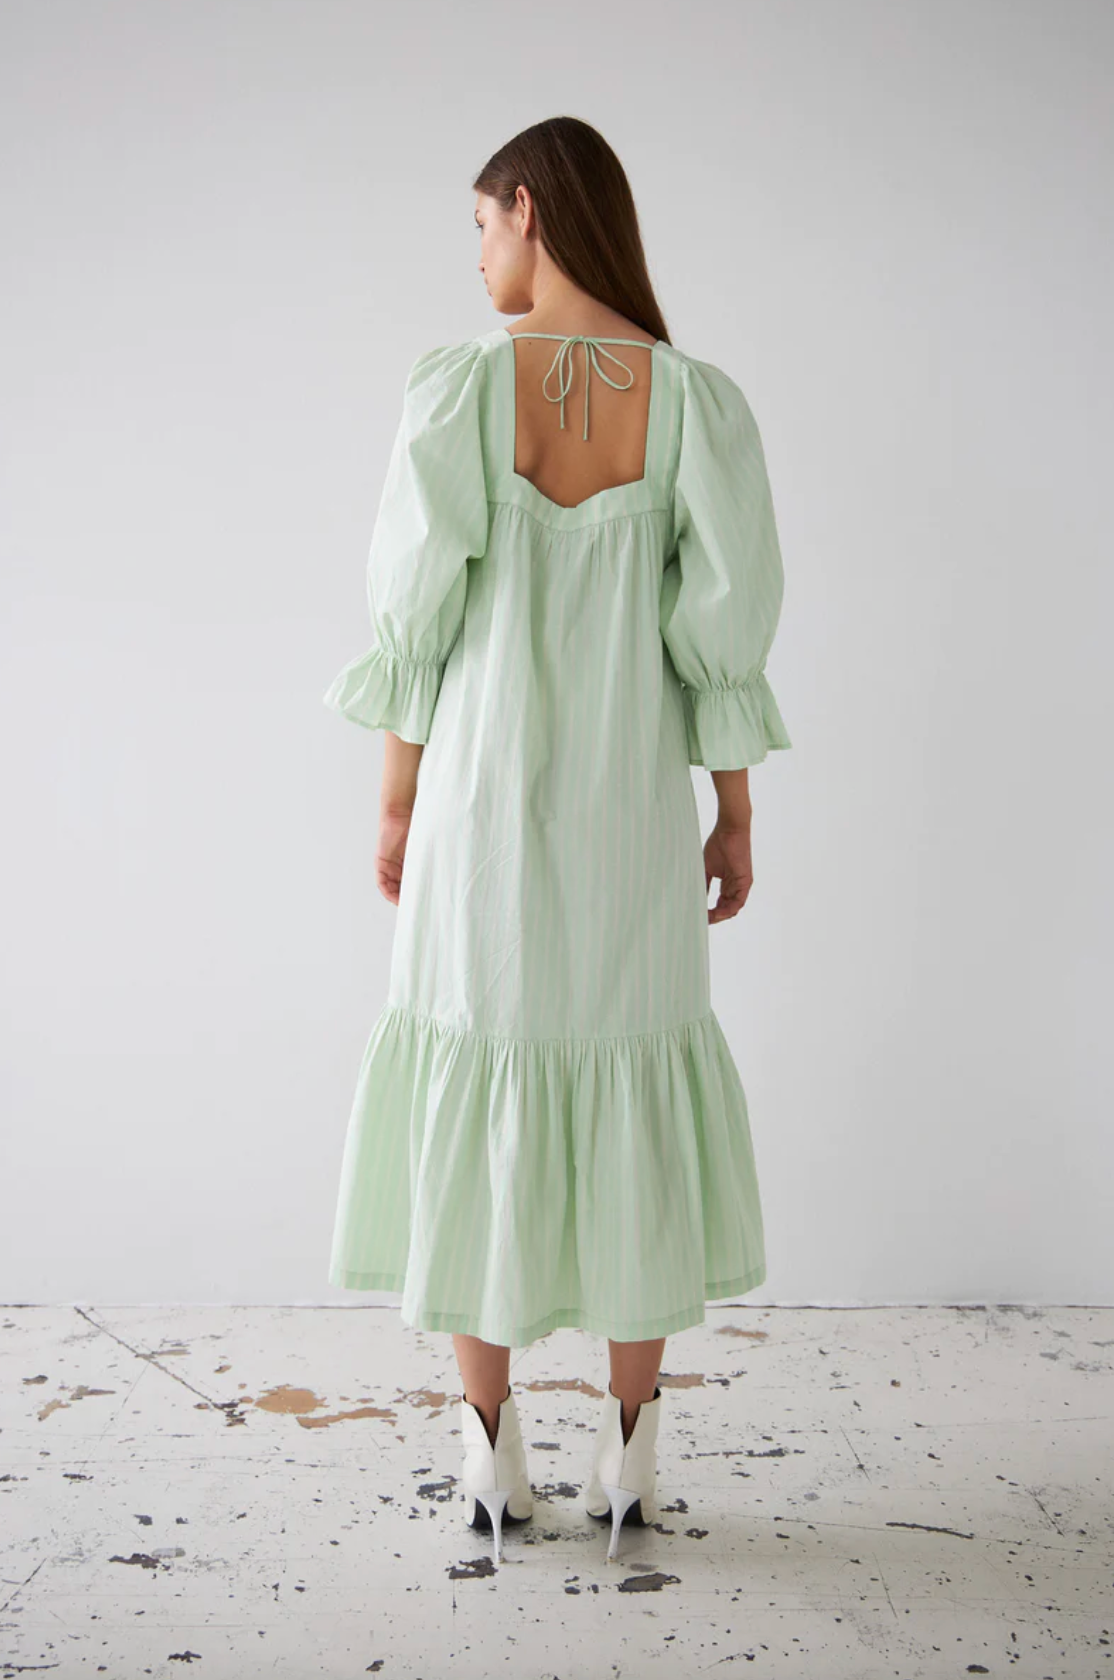 Stella Nova - Mint Tea Stripe Dress - Image 3